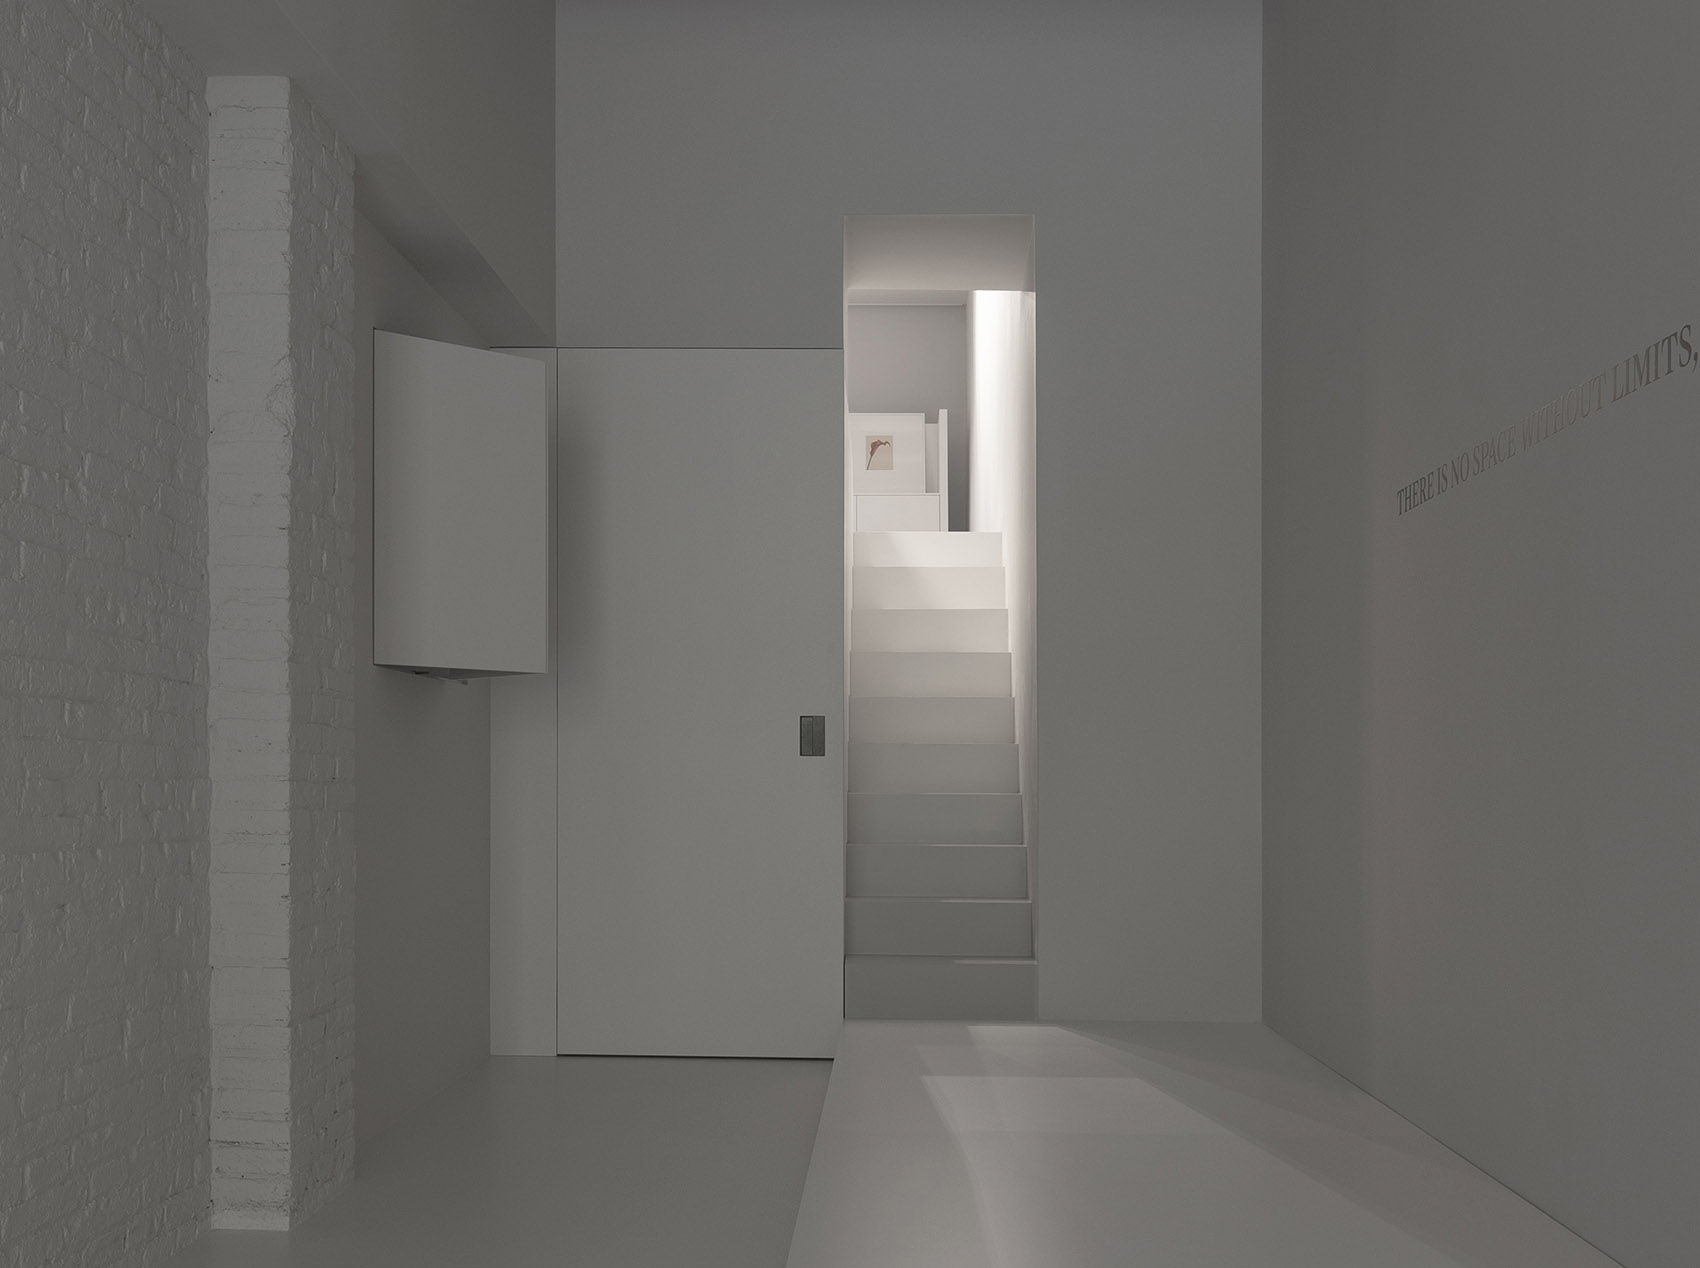 RI HOUSE家居展厅，巴塞罗那/当代艺术画廊的空间形式结合家庭空间元素-66